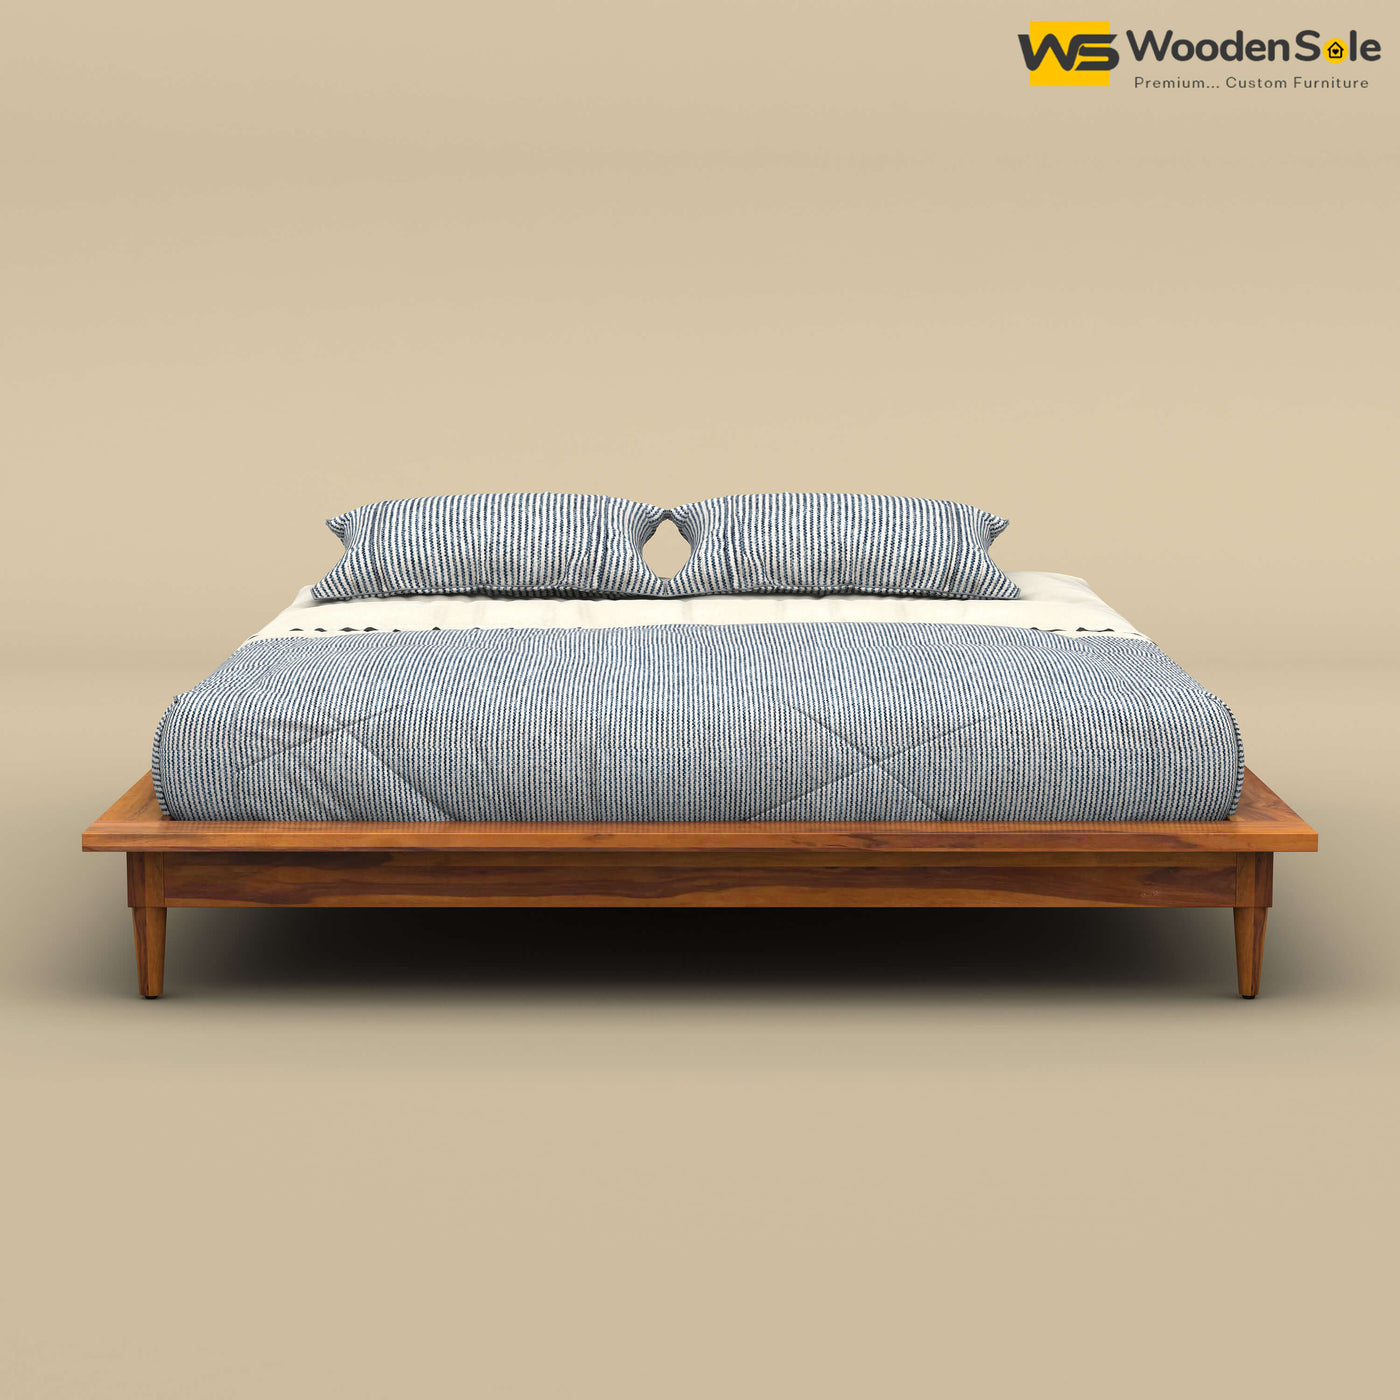 Floora Platform Bed (King Size, Honey Finish)